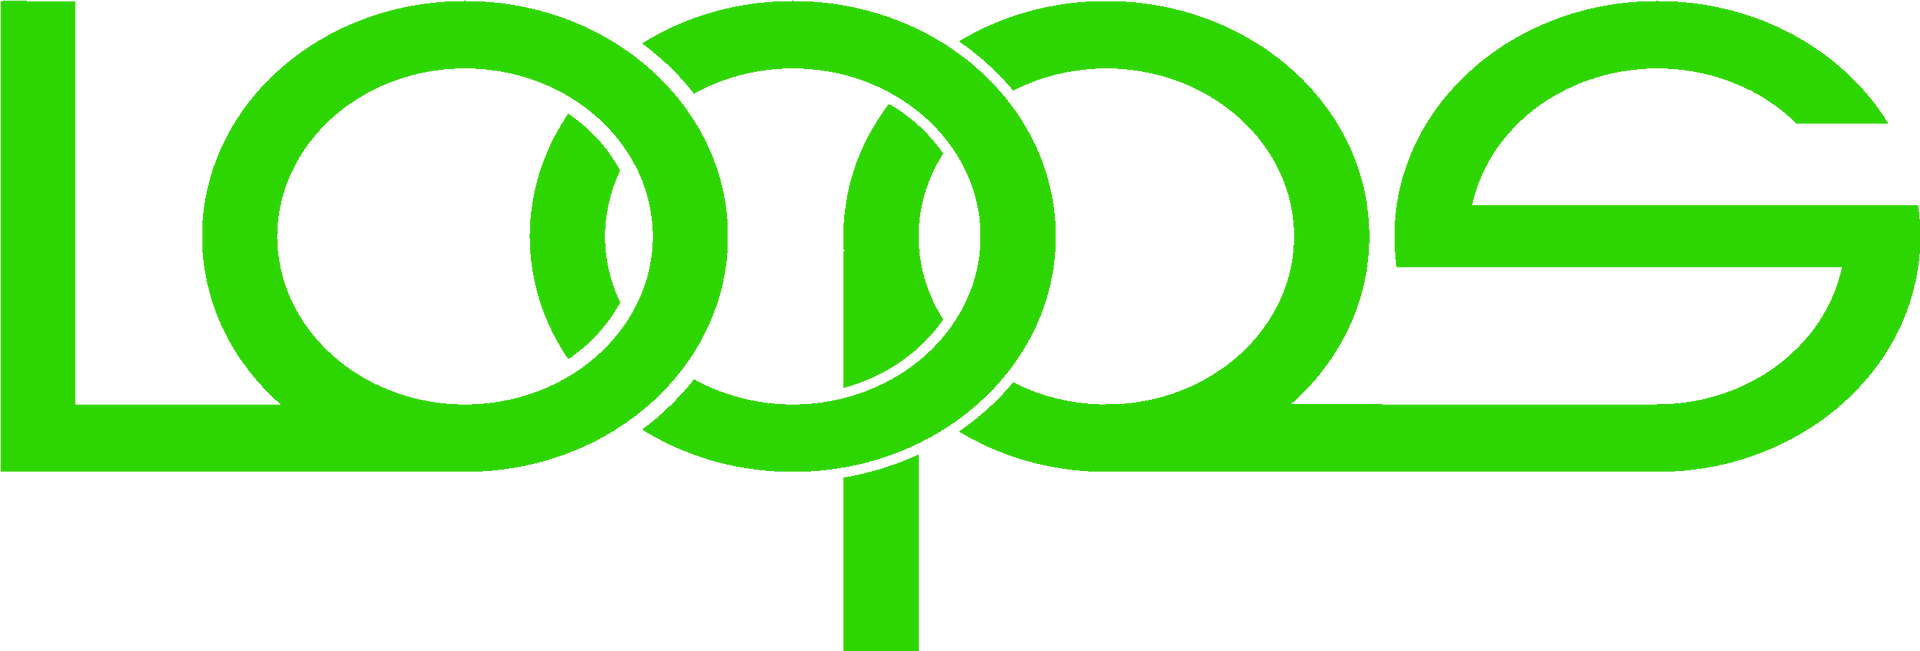 Loop Marketing Logo PNG